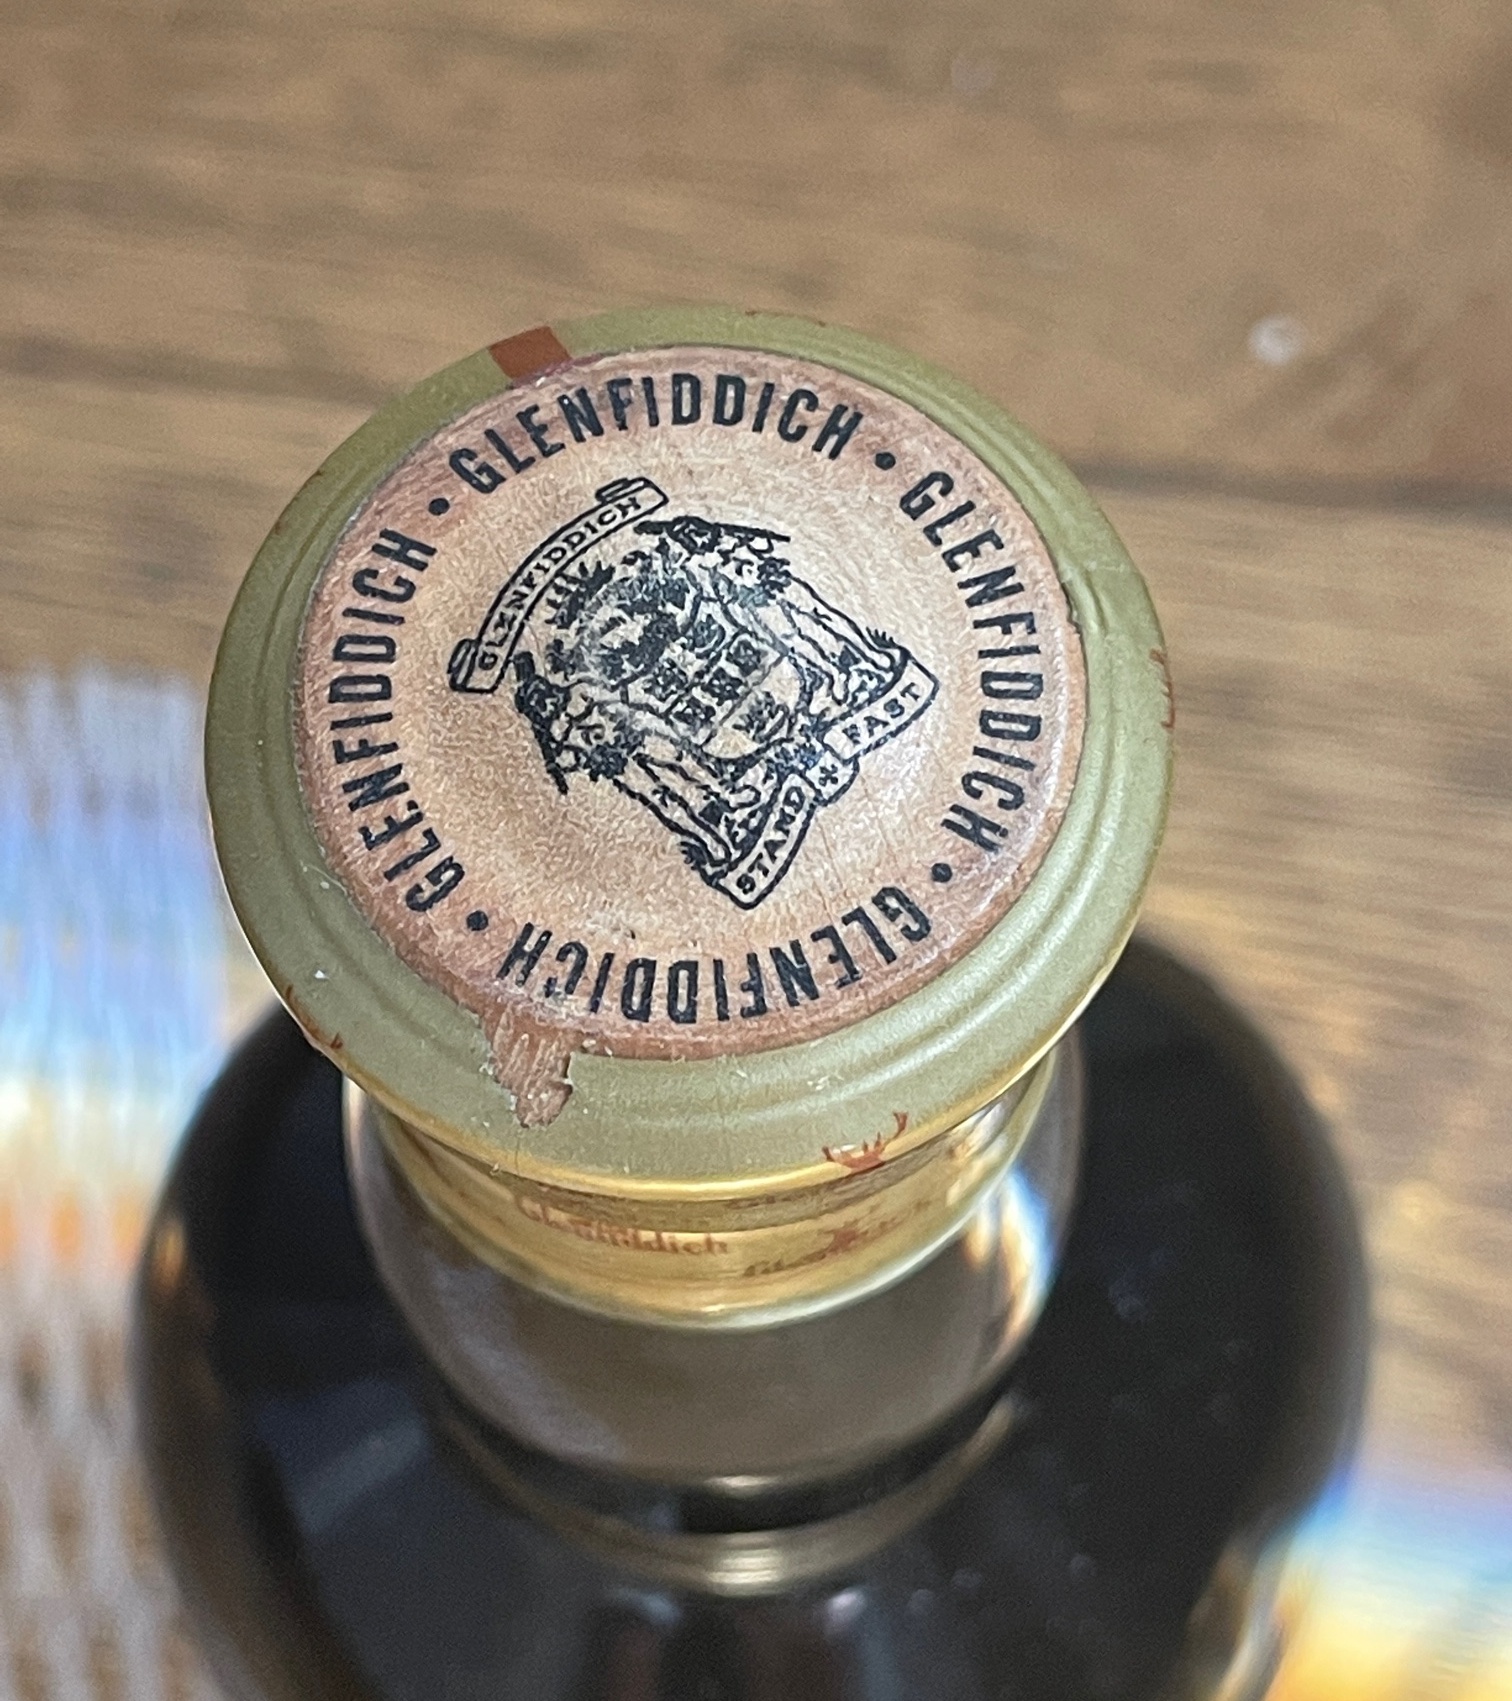 Bottle of Glenfiddich Malt Whisky Liquer - Bottle 1 of 5. - Image 3 of 5